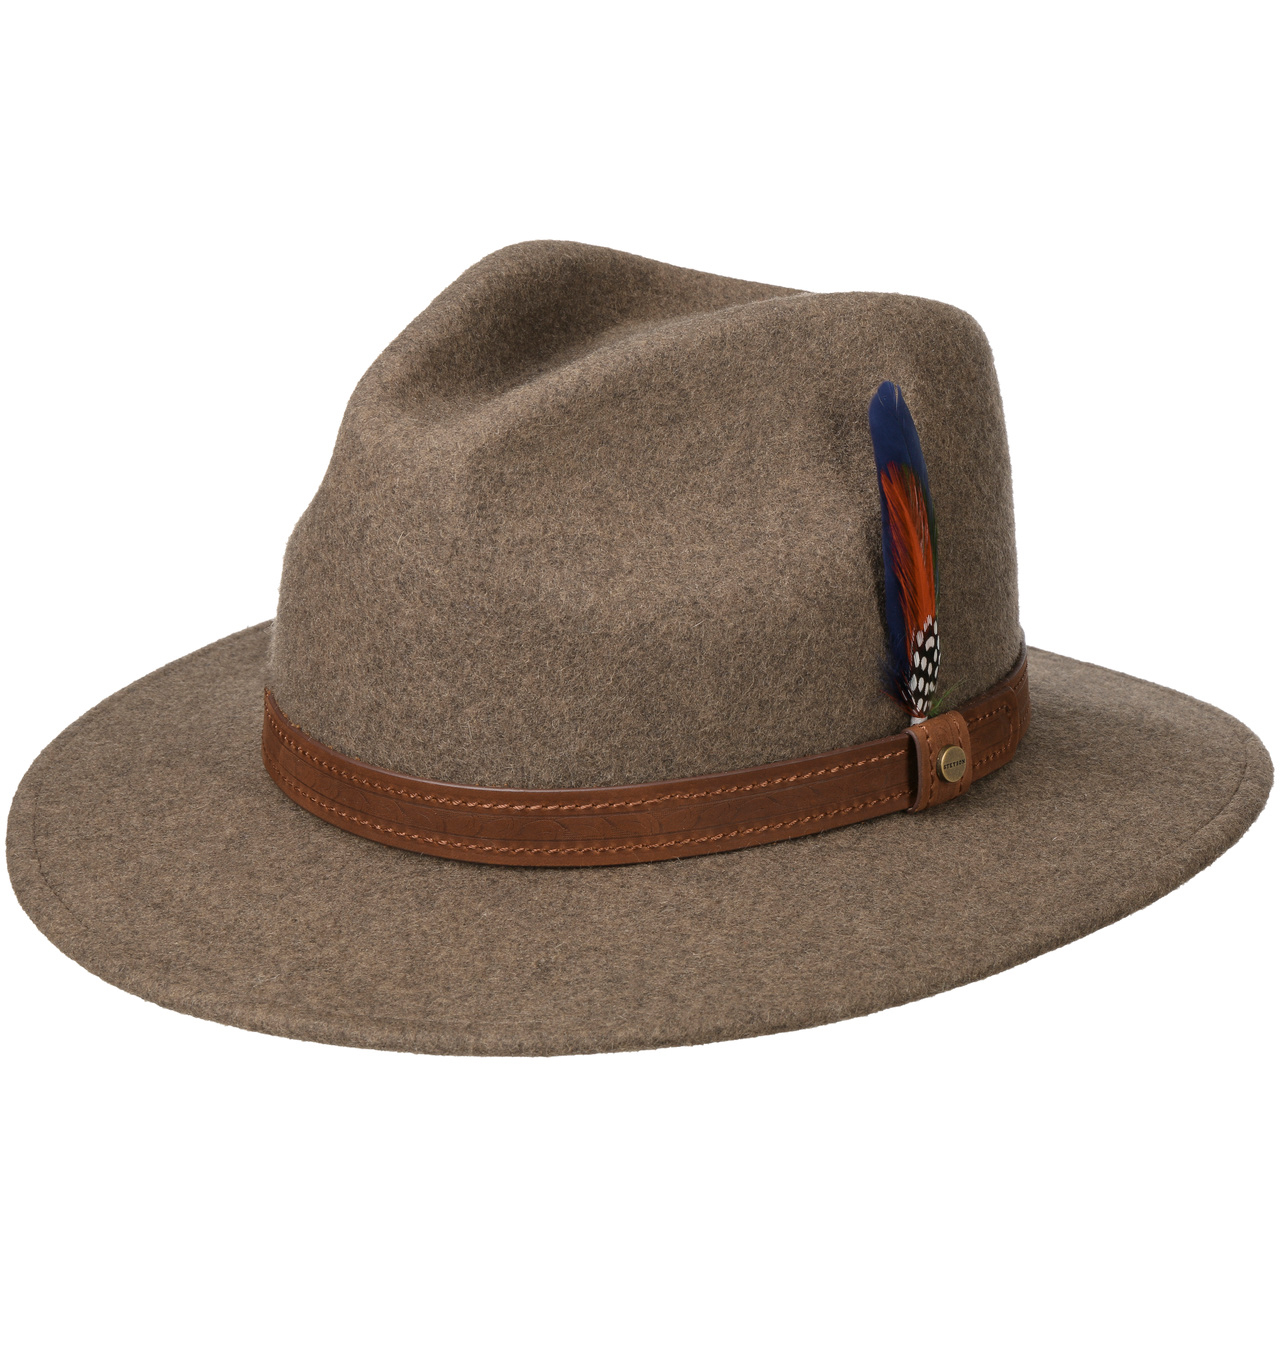 Stetson - Rincova Traveller Wool Hat - Light Brown